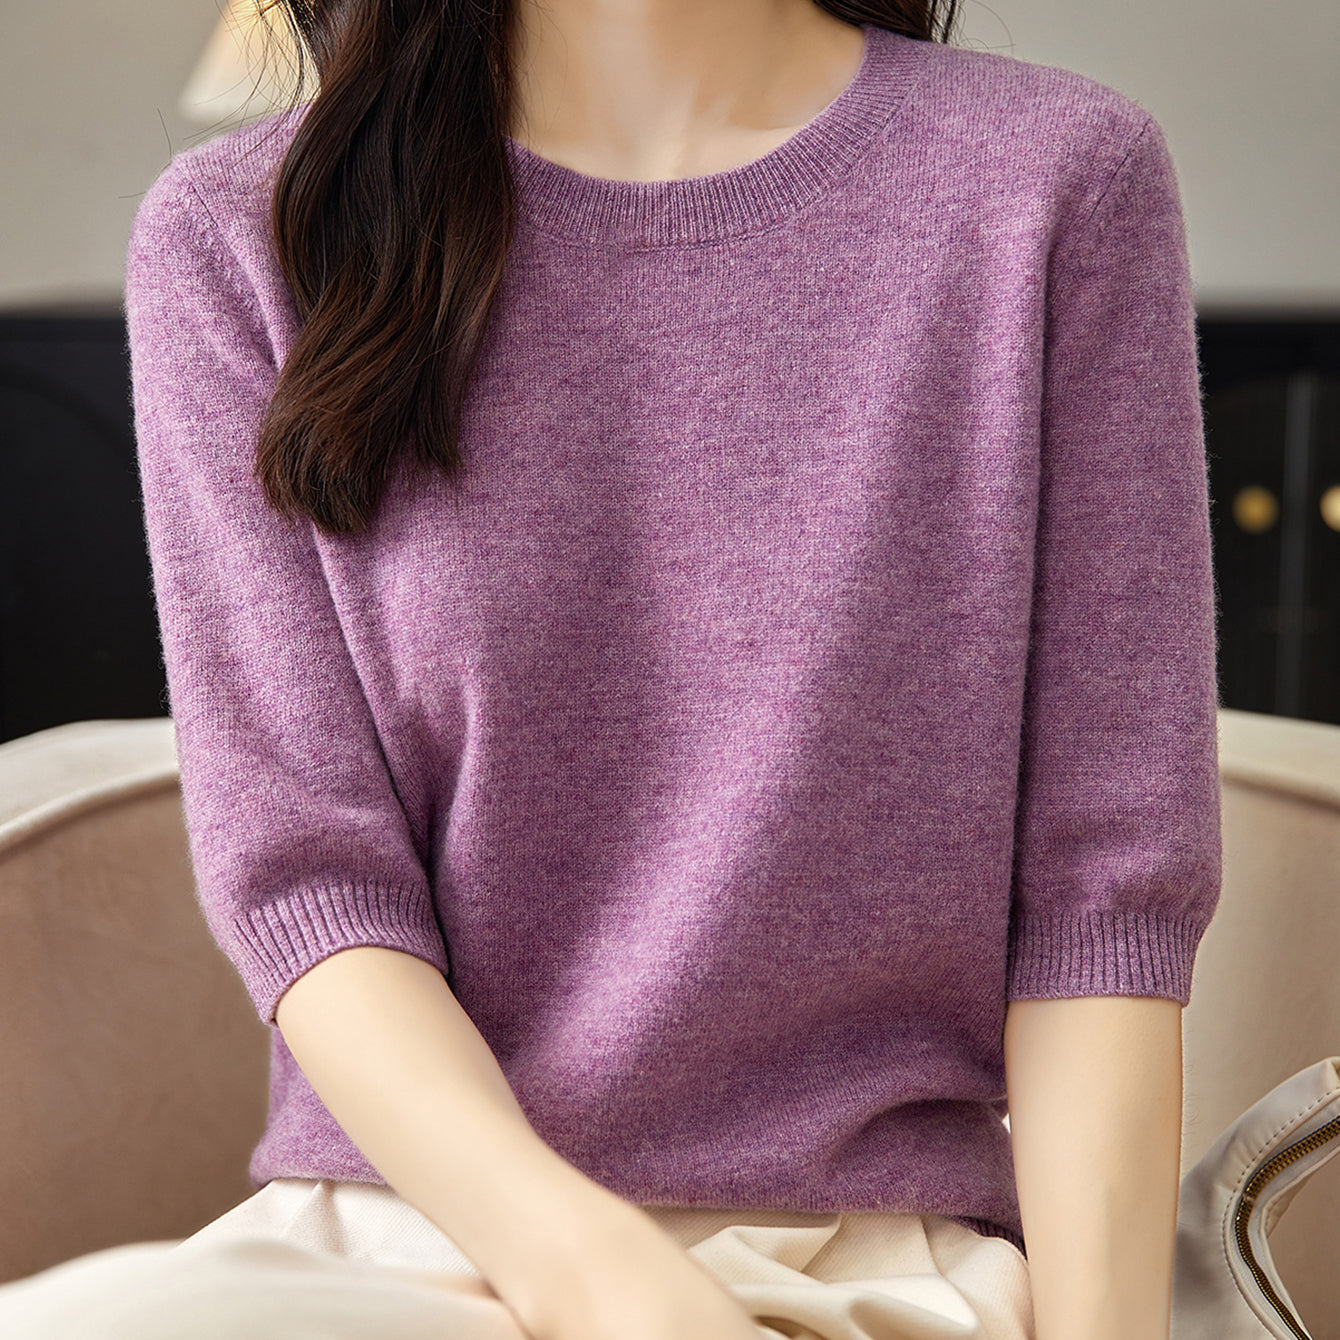 Chanyarn Women's 100% Merino Wool Sweater Crewneck Half Sleeve Tops Lightweight Spring Summer Sweater Knit Pullover